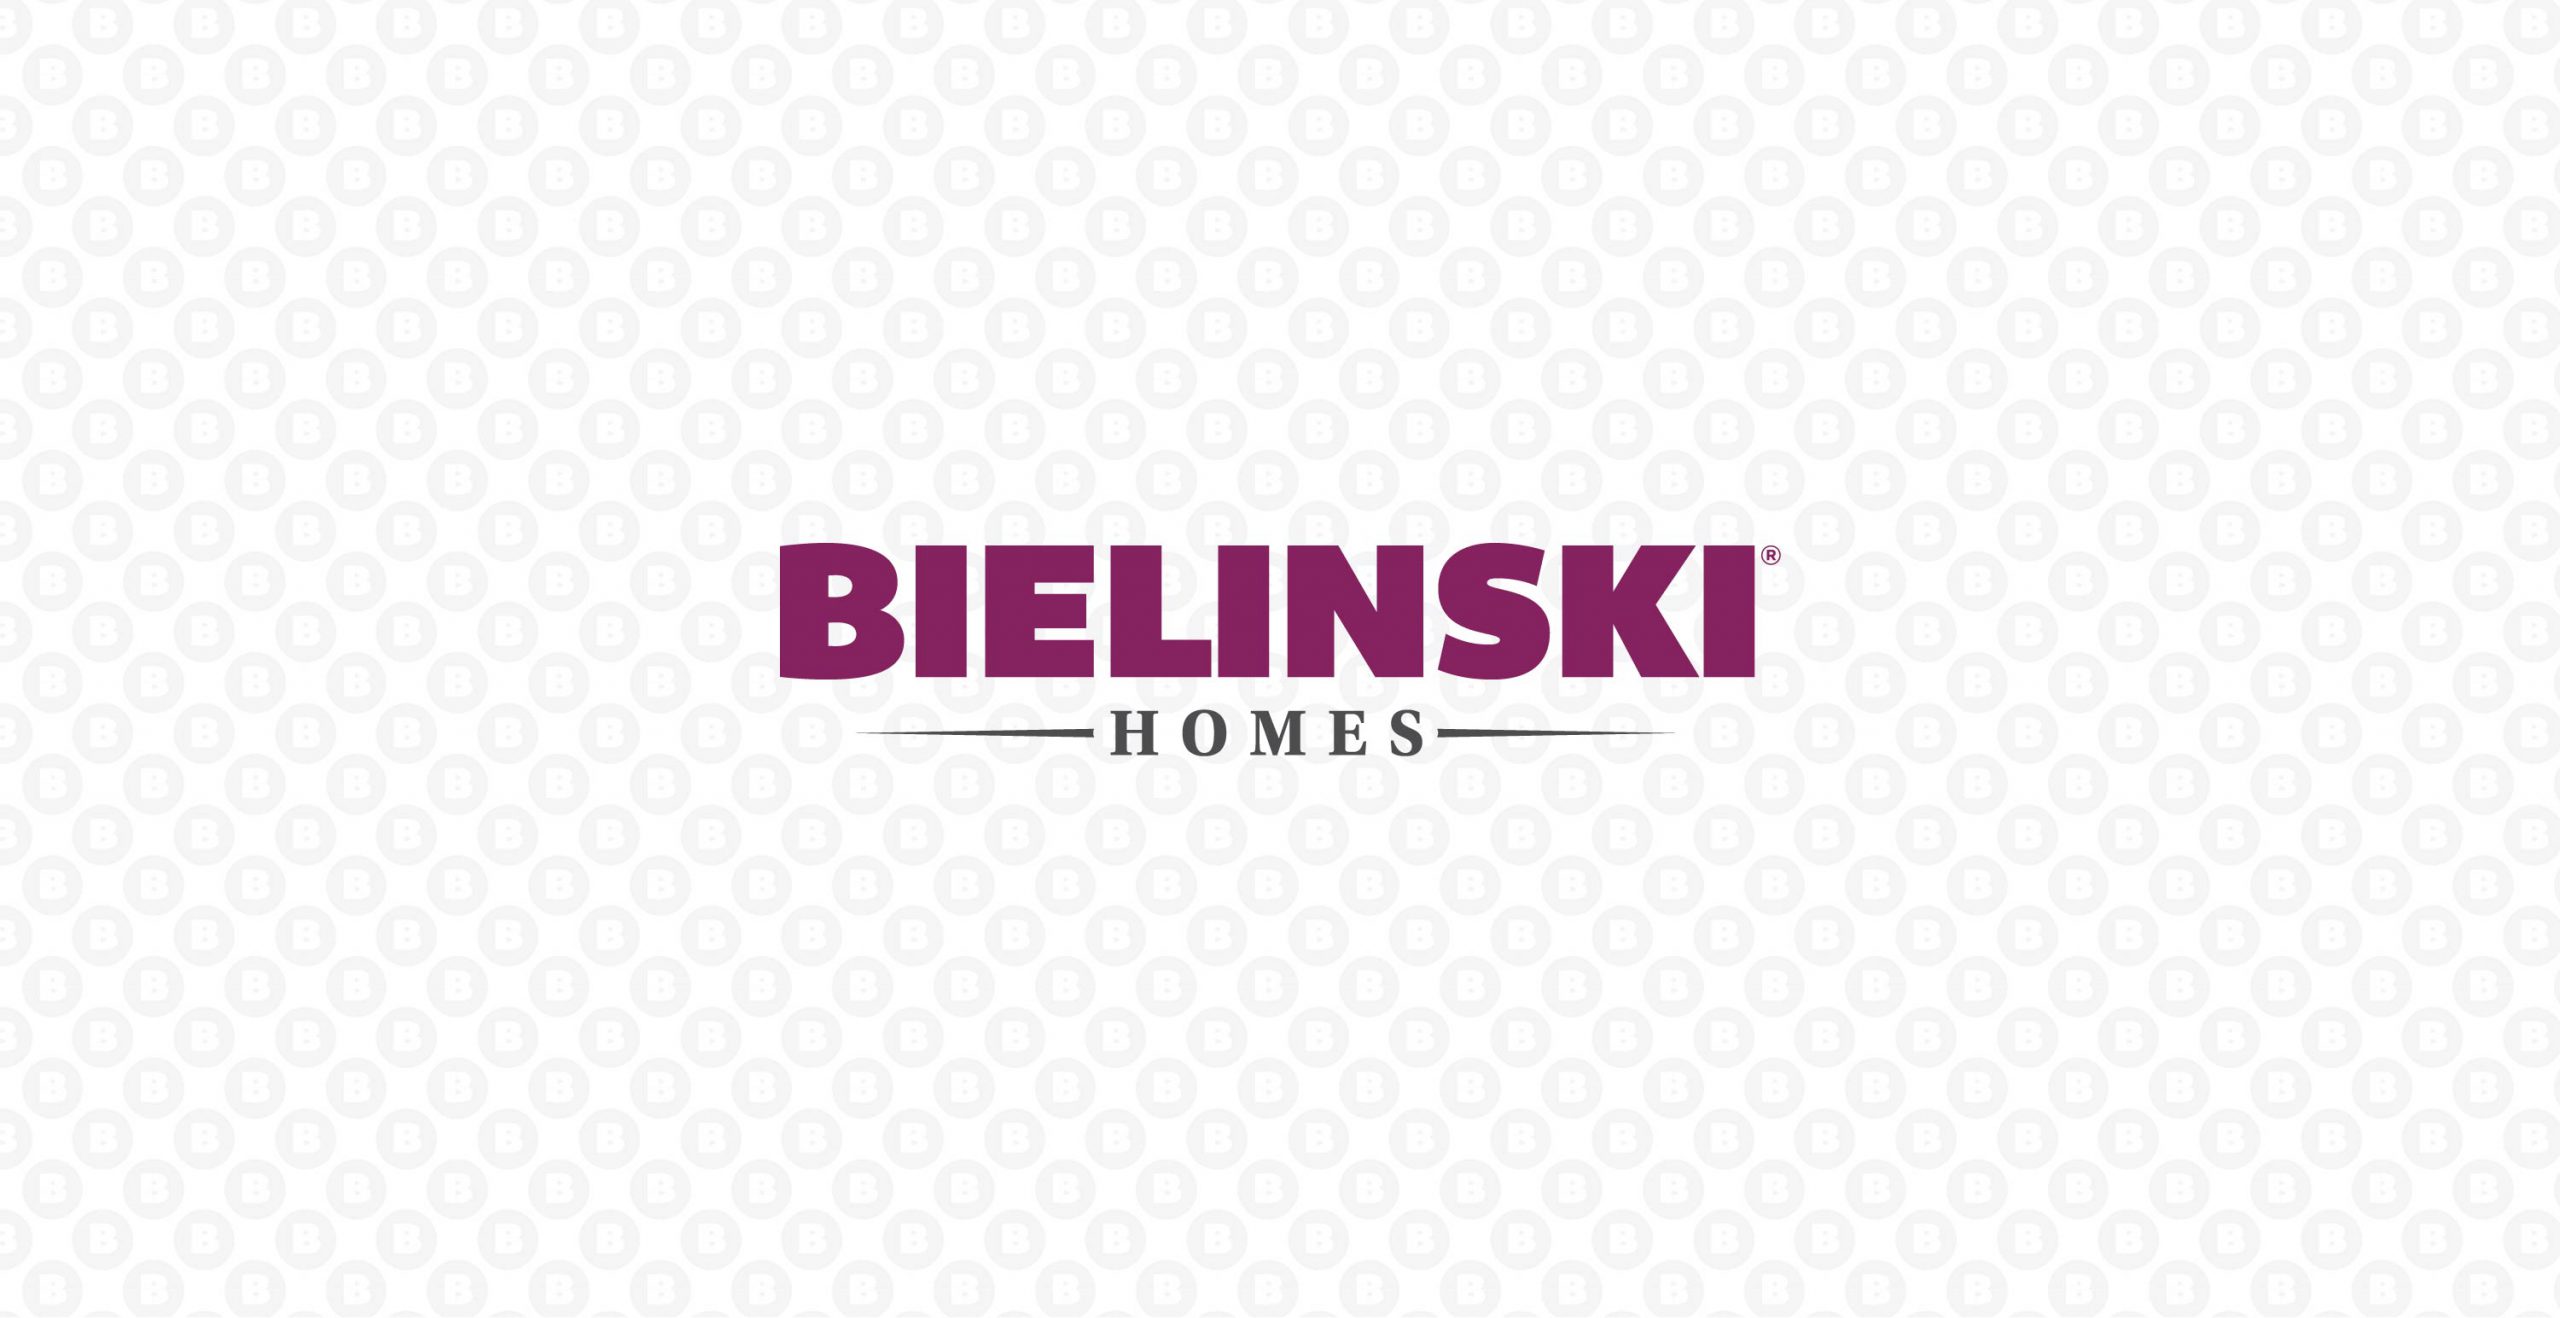 Bielinski Homes - logo on background